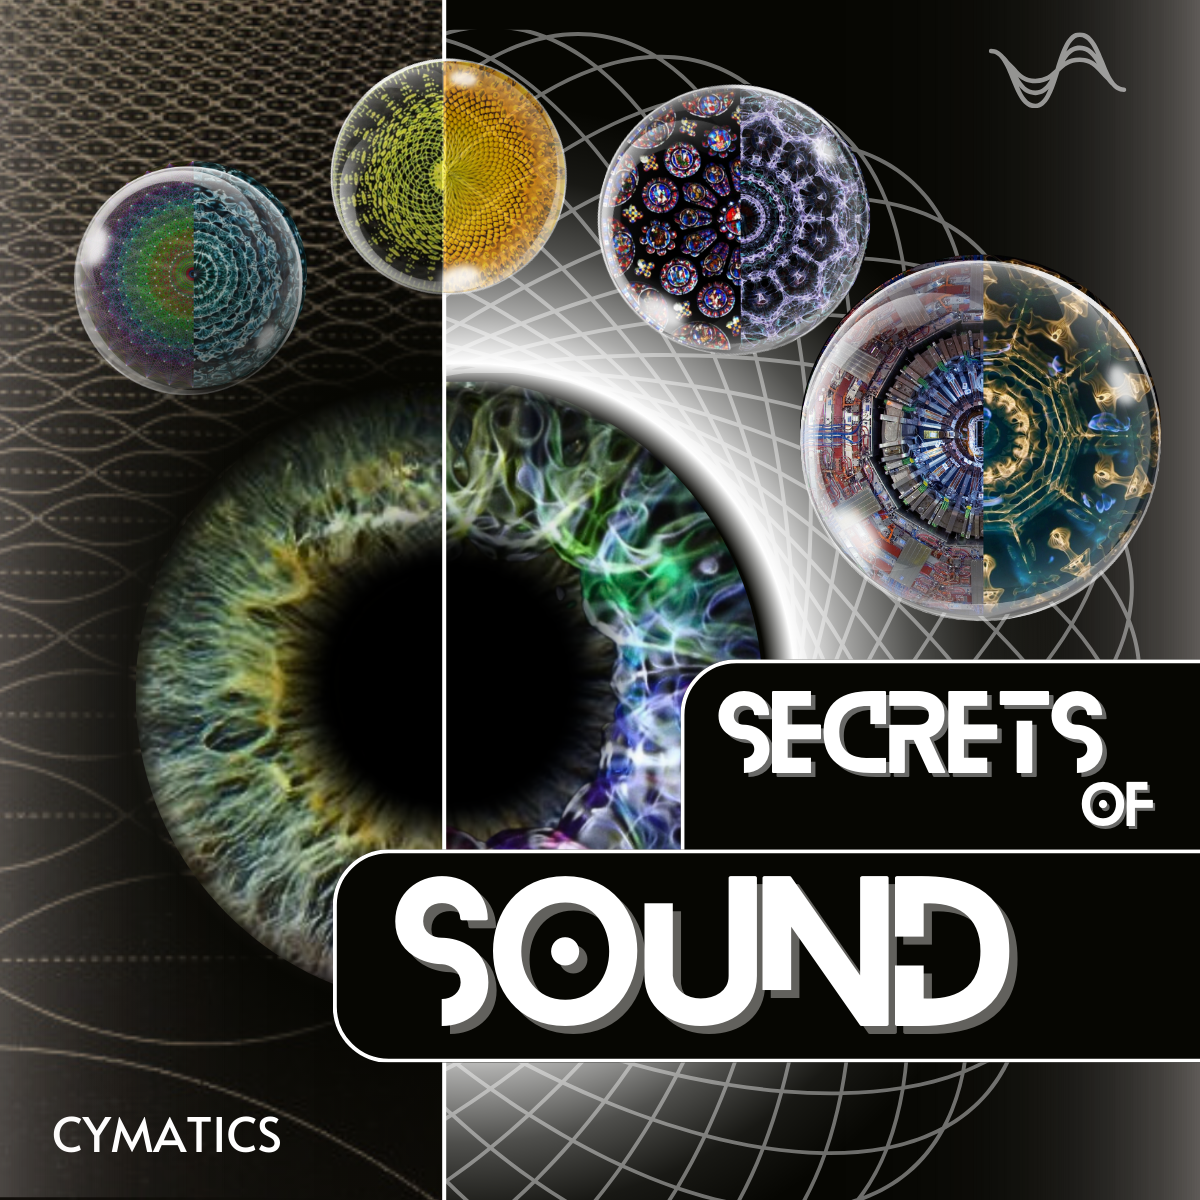 Secrets of Sound: Cymatic Mastery